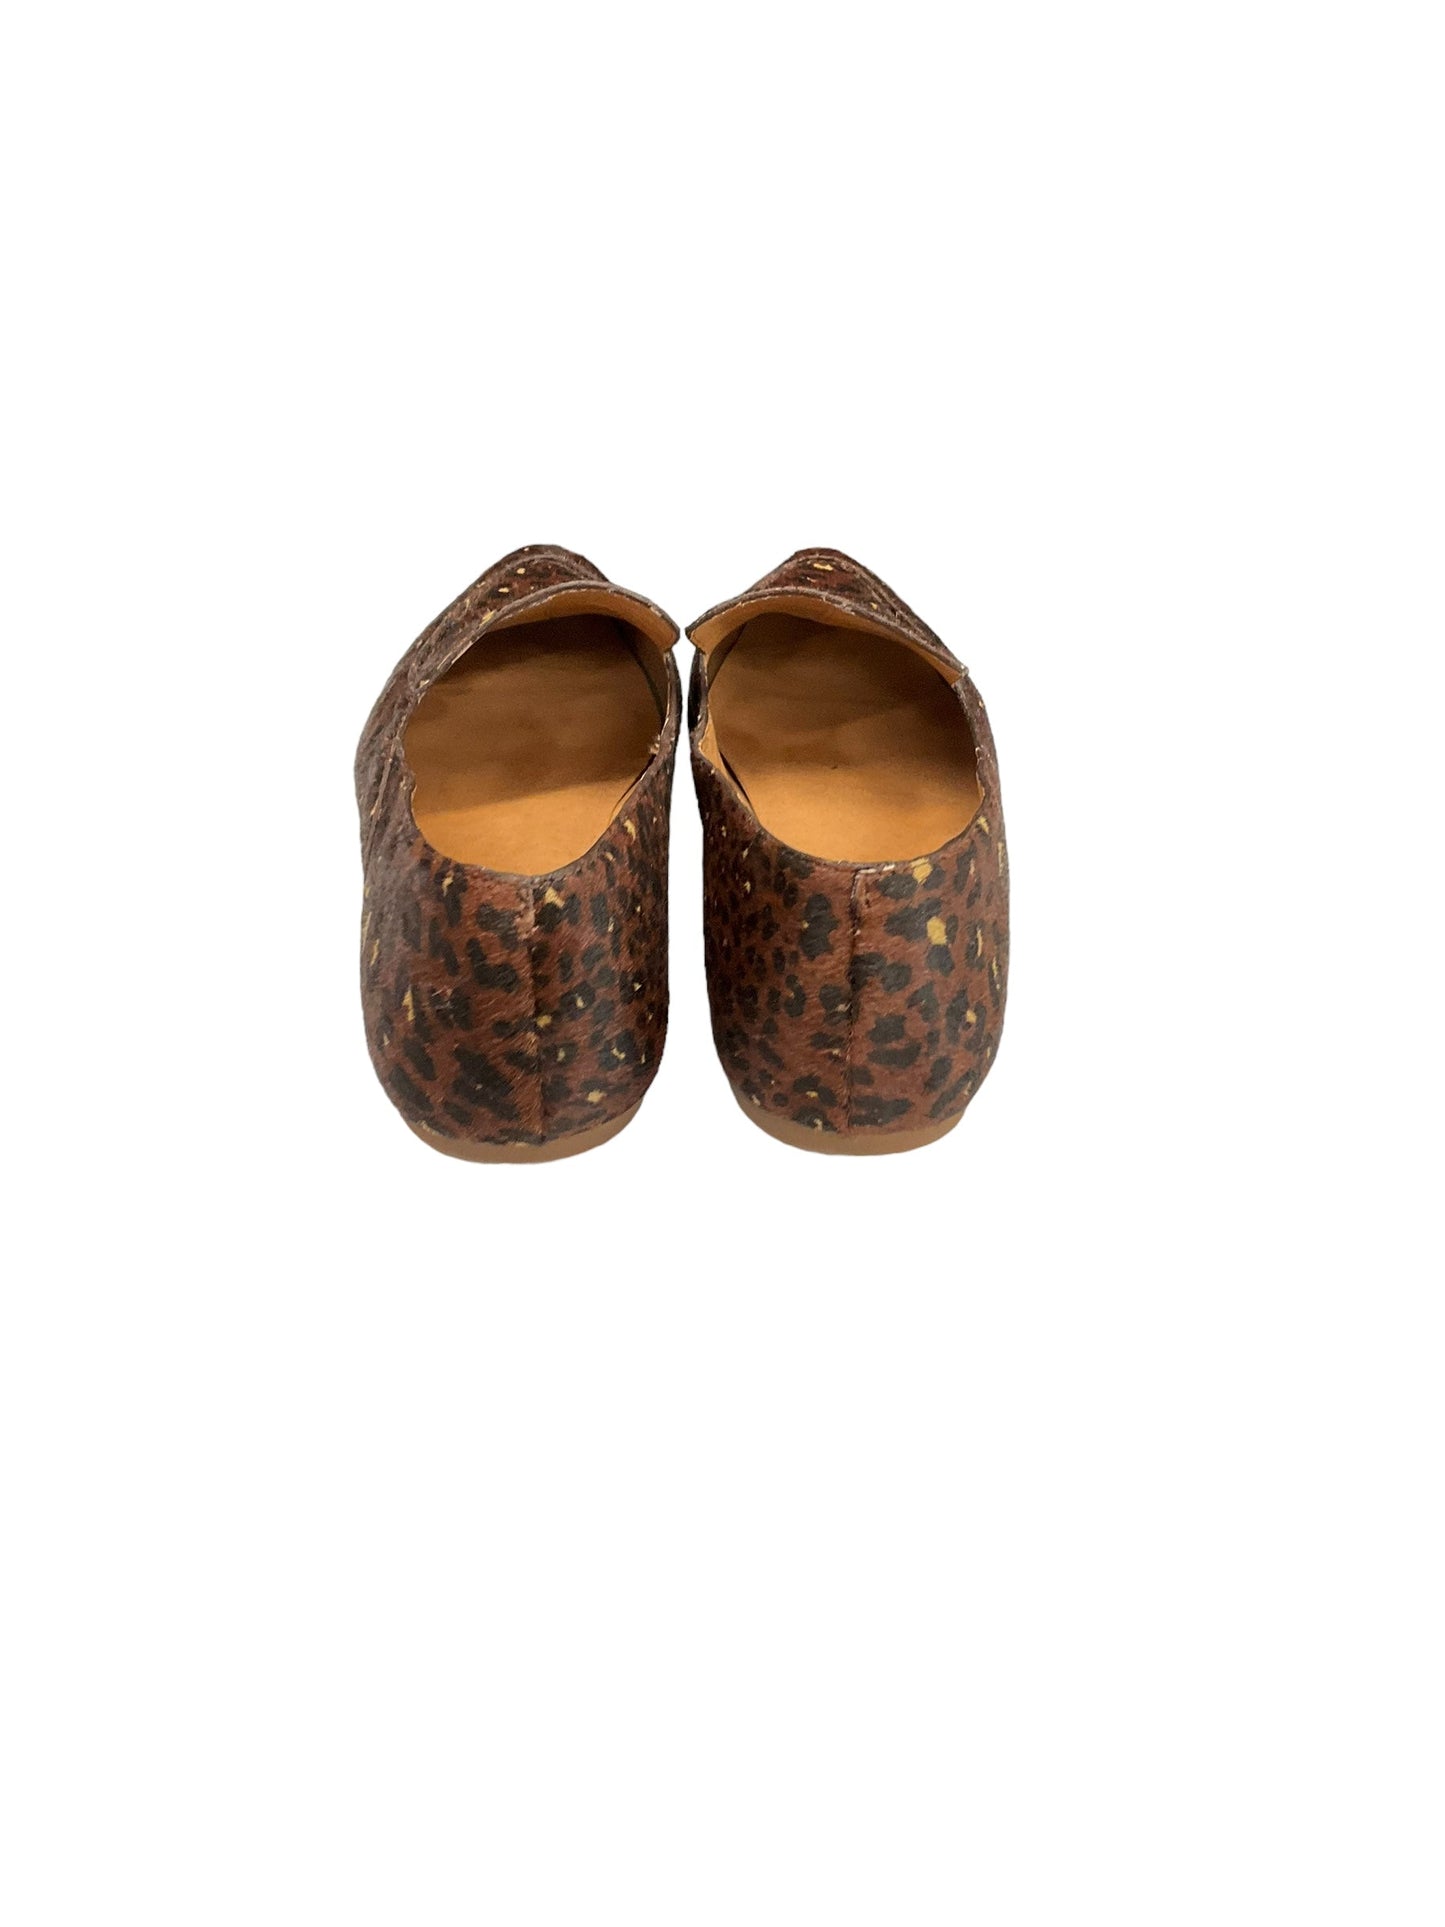 Animal Print Shoes Flats Madewell, Size 8.5